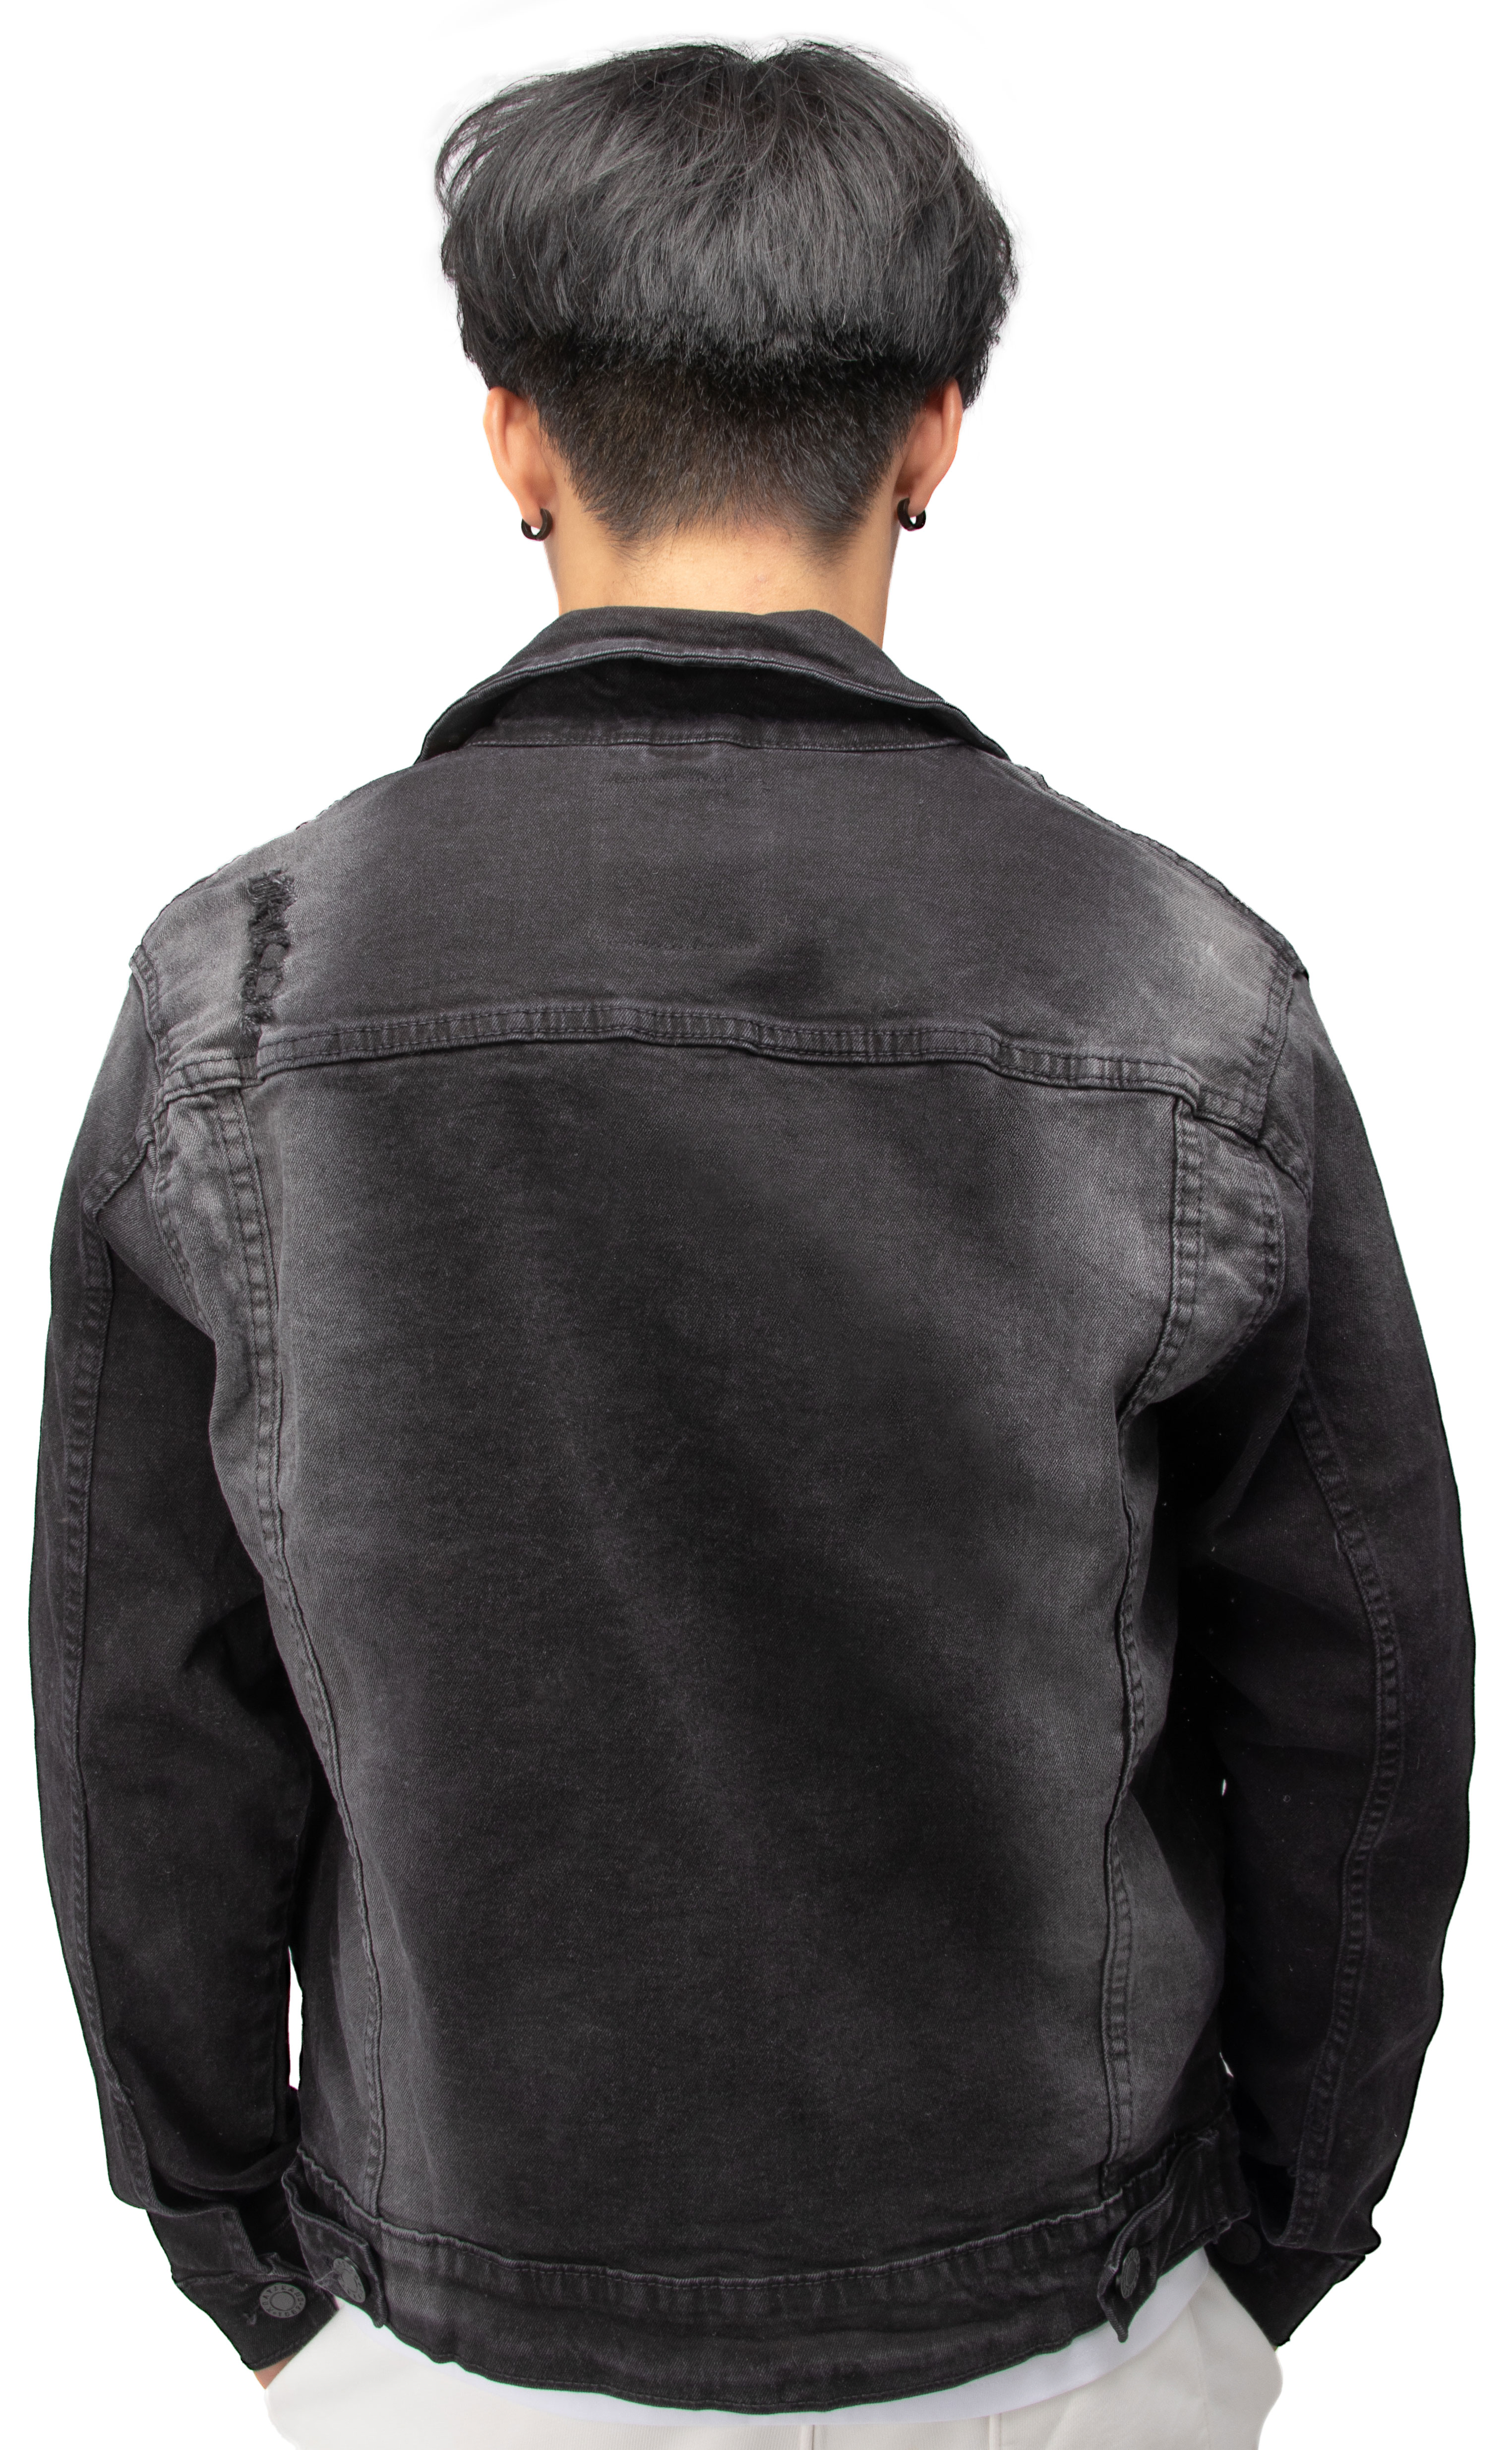 X RAY Men's Denim Jacket, Washed Ripped Distressed Flex Stretch Casual Trucker Biker Jean Jacket, Black Denim - Ripped, XX-Large - image 3 of 9